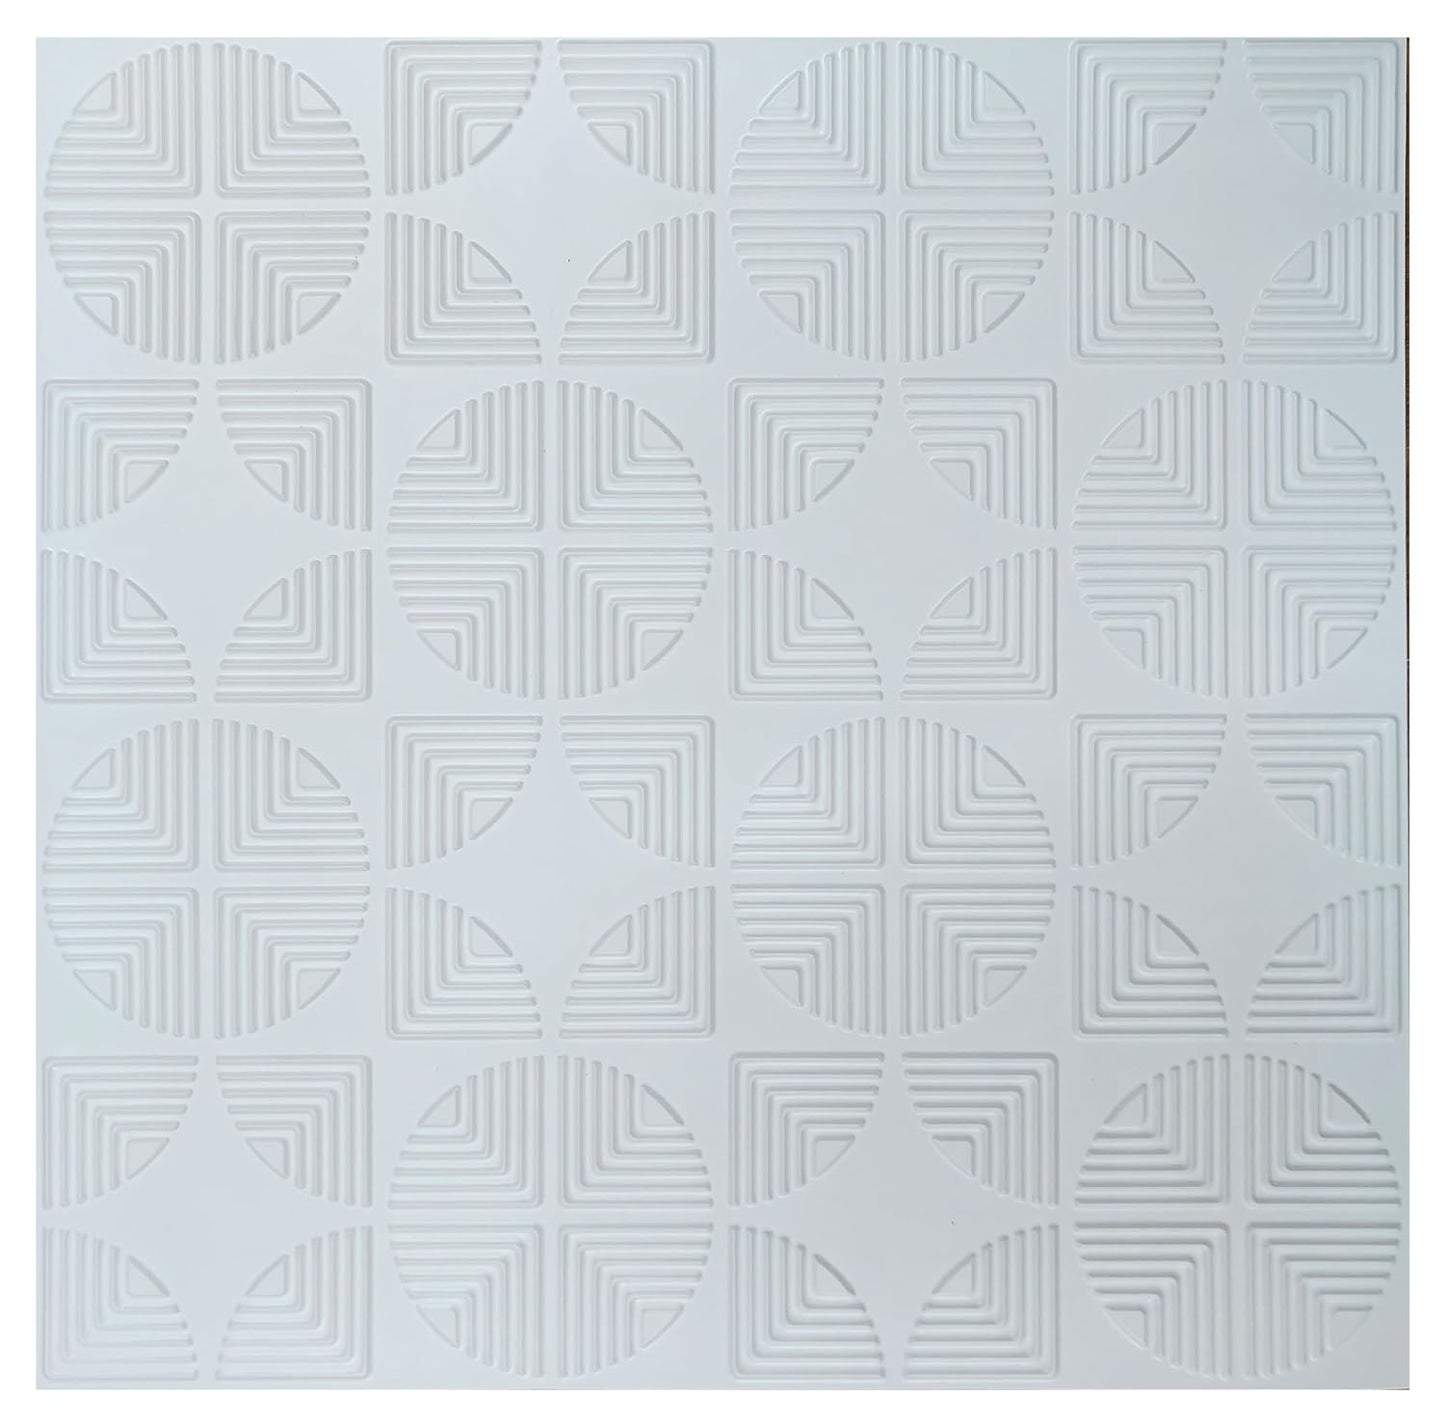 Kayra Decor 3D Self Adhesive Wall Panel -White Geometric Design - (Size 50 x 50 CM)